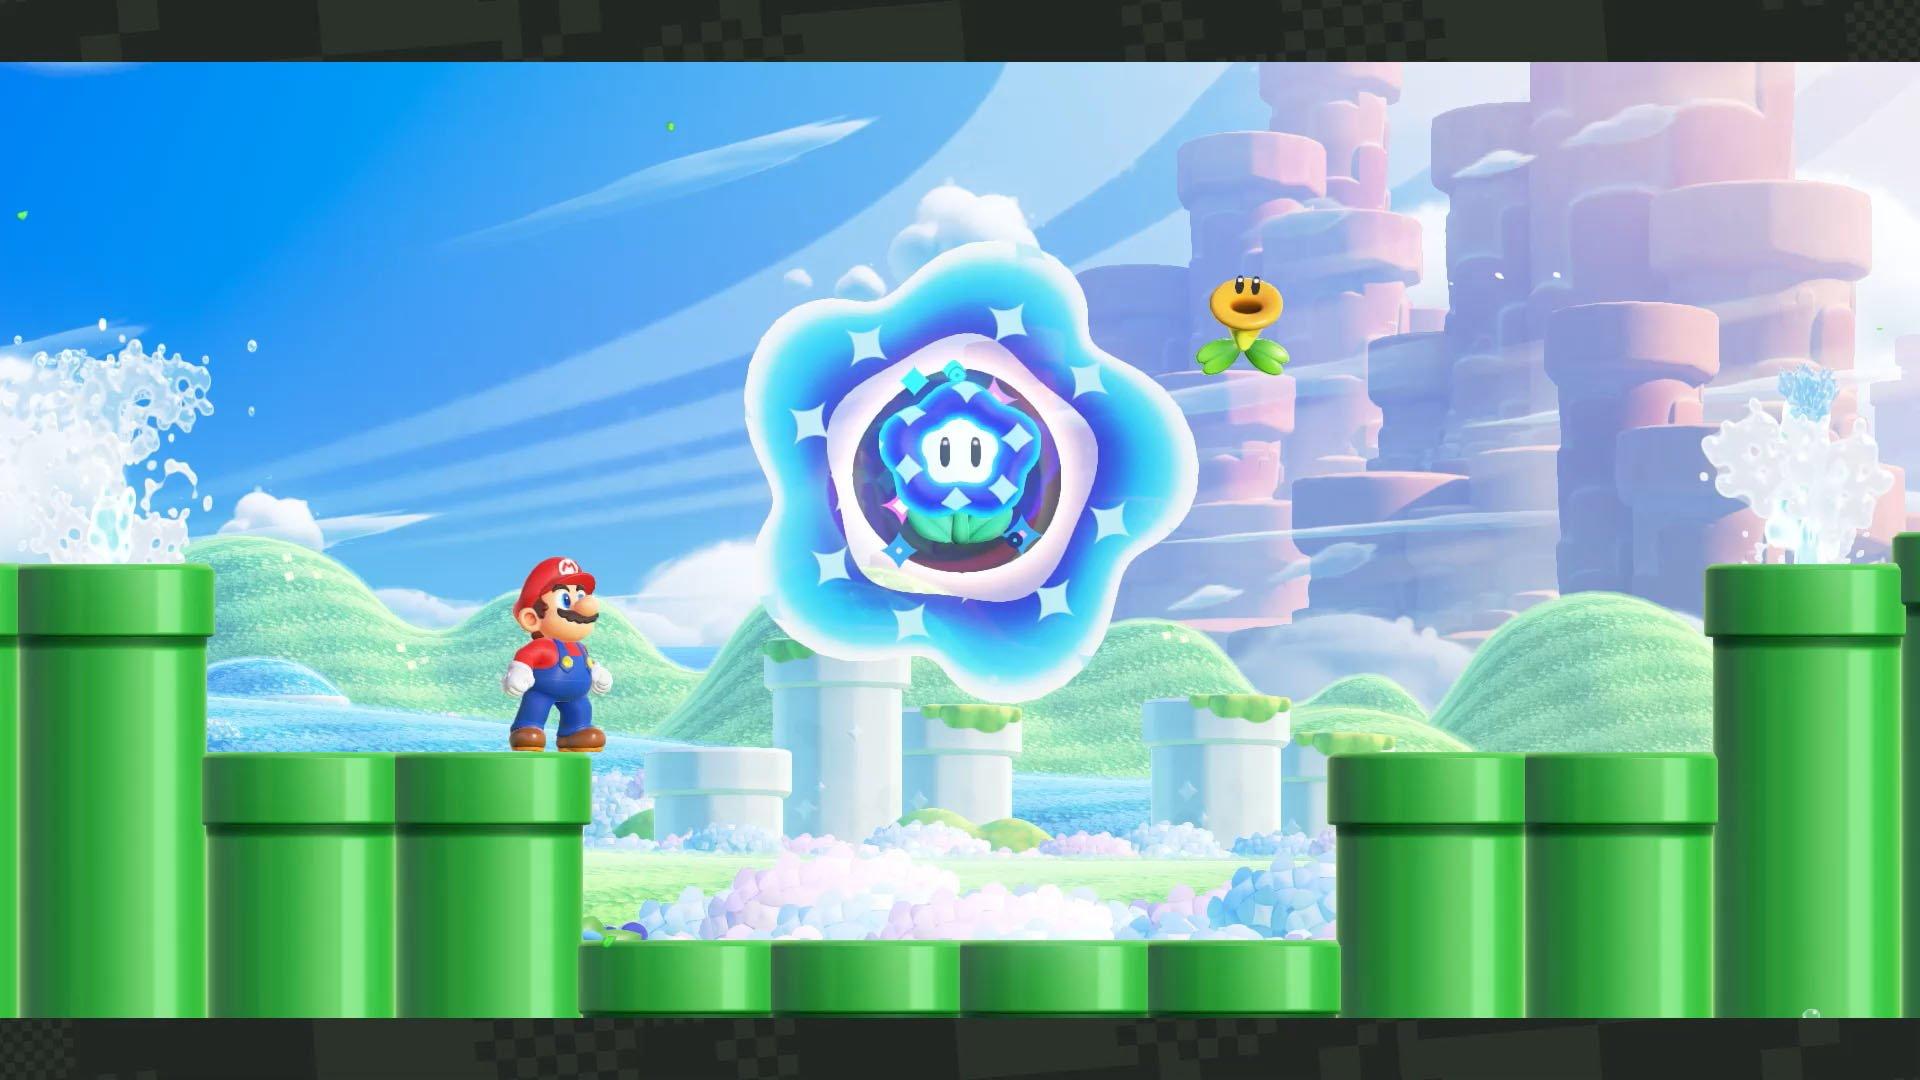  Super Mario Bros.™ Wonder - Nintendo Switch (US Version) :  Everything Else